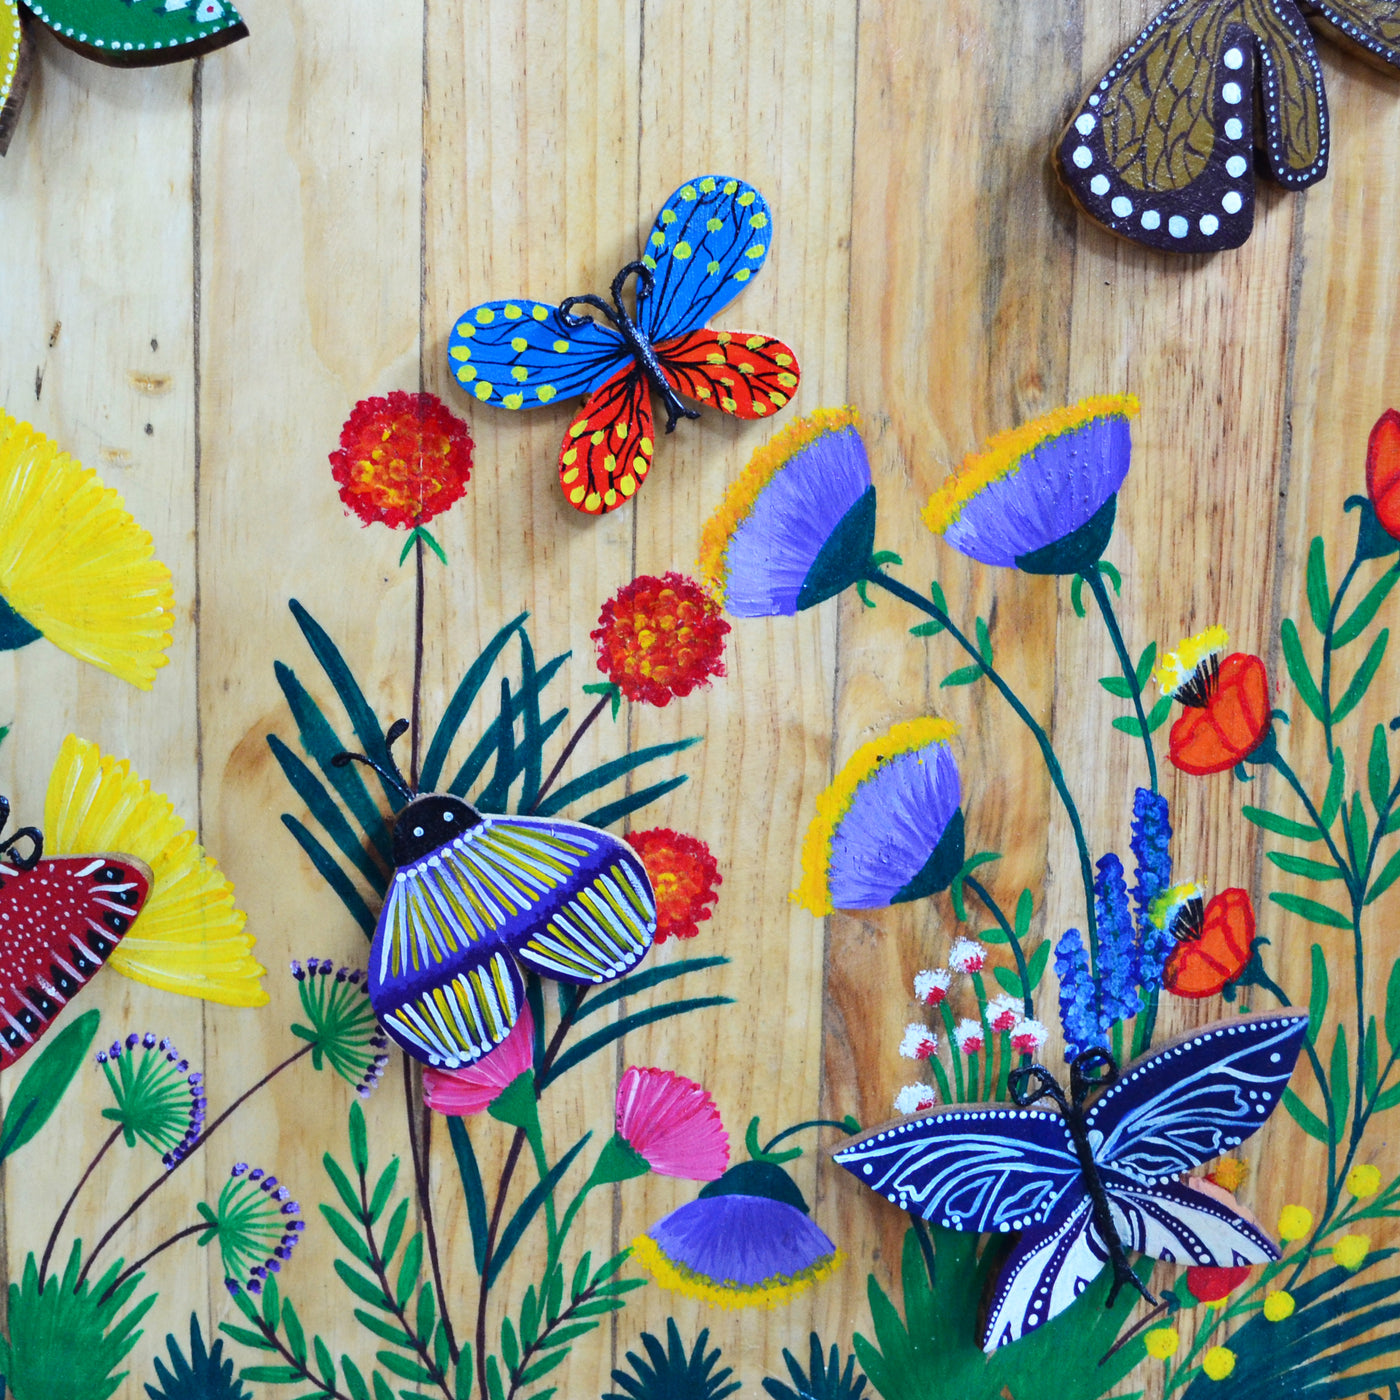 Chinhhari arts wooden hand painted butterfly wall decor - WWD010 - Chinhhari Arts store